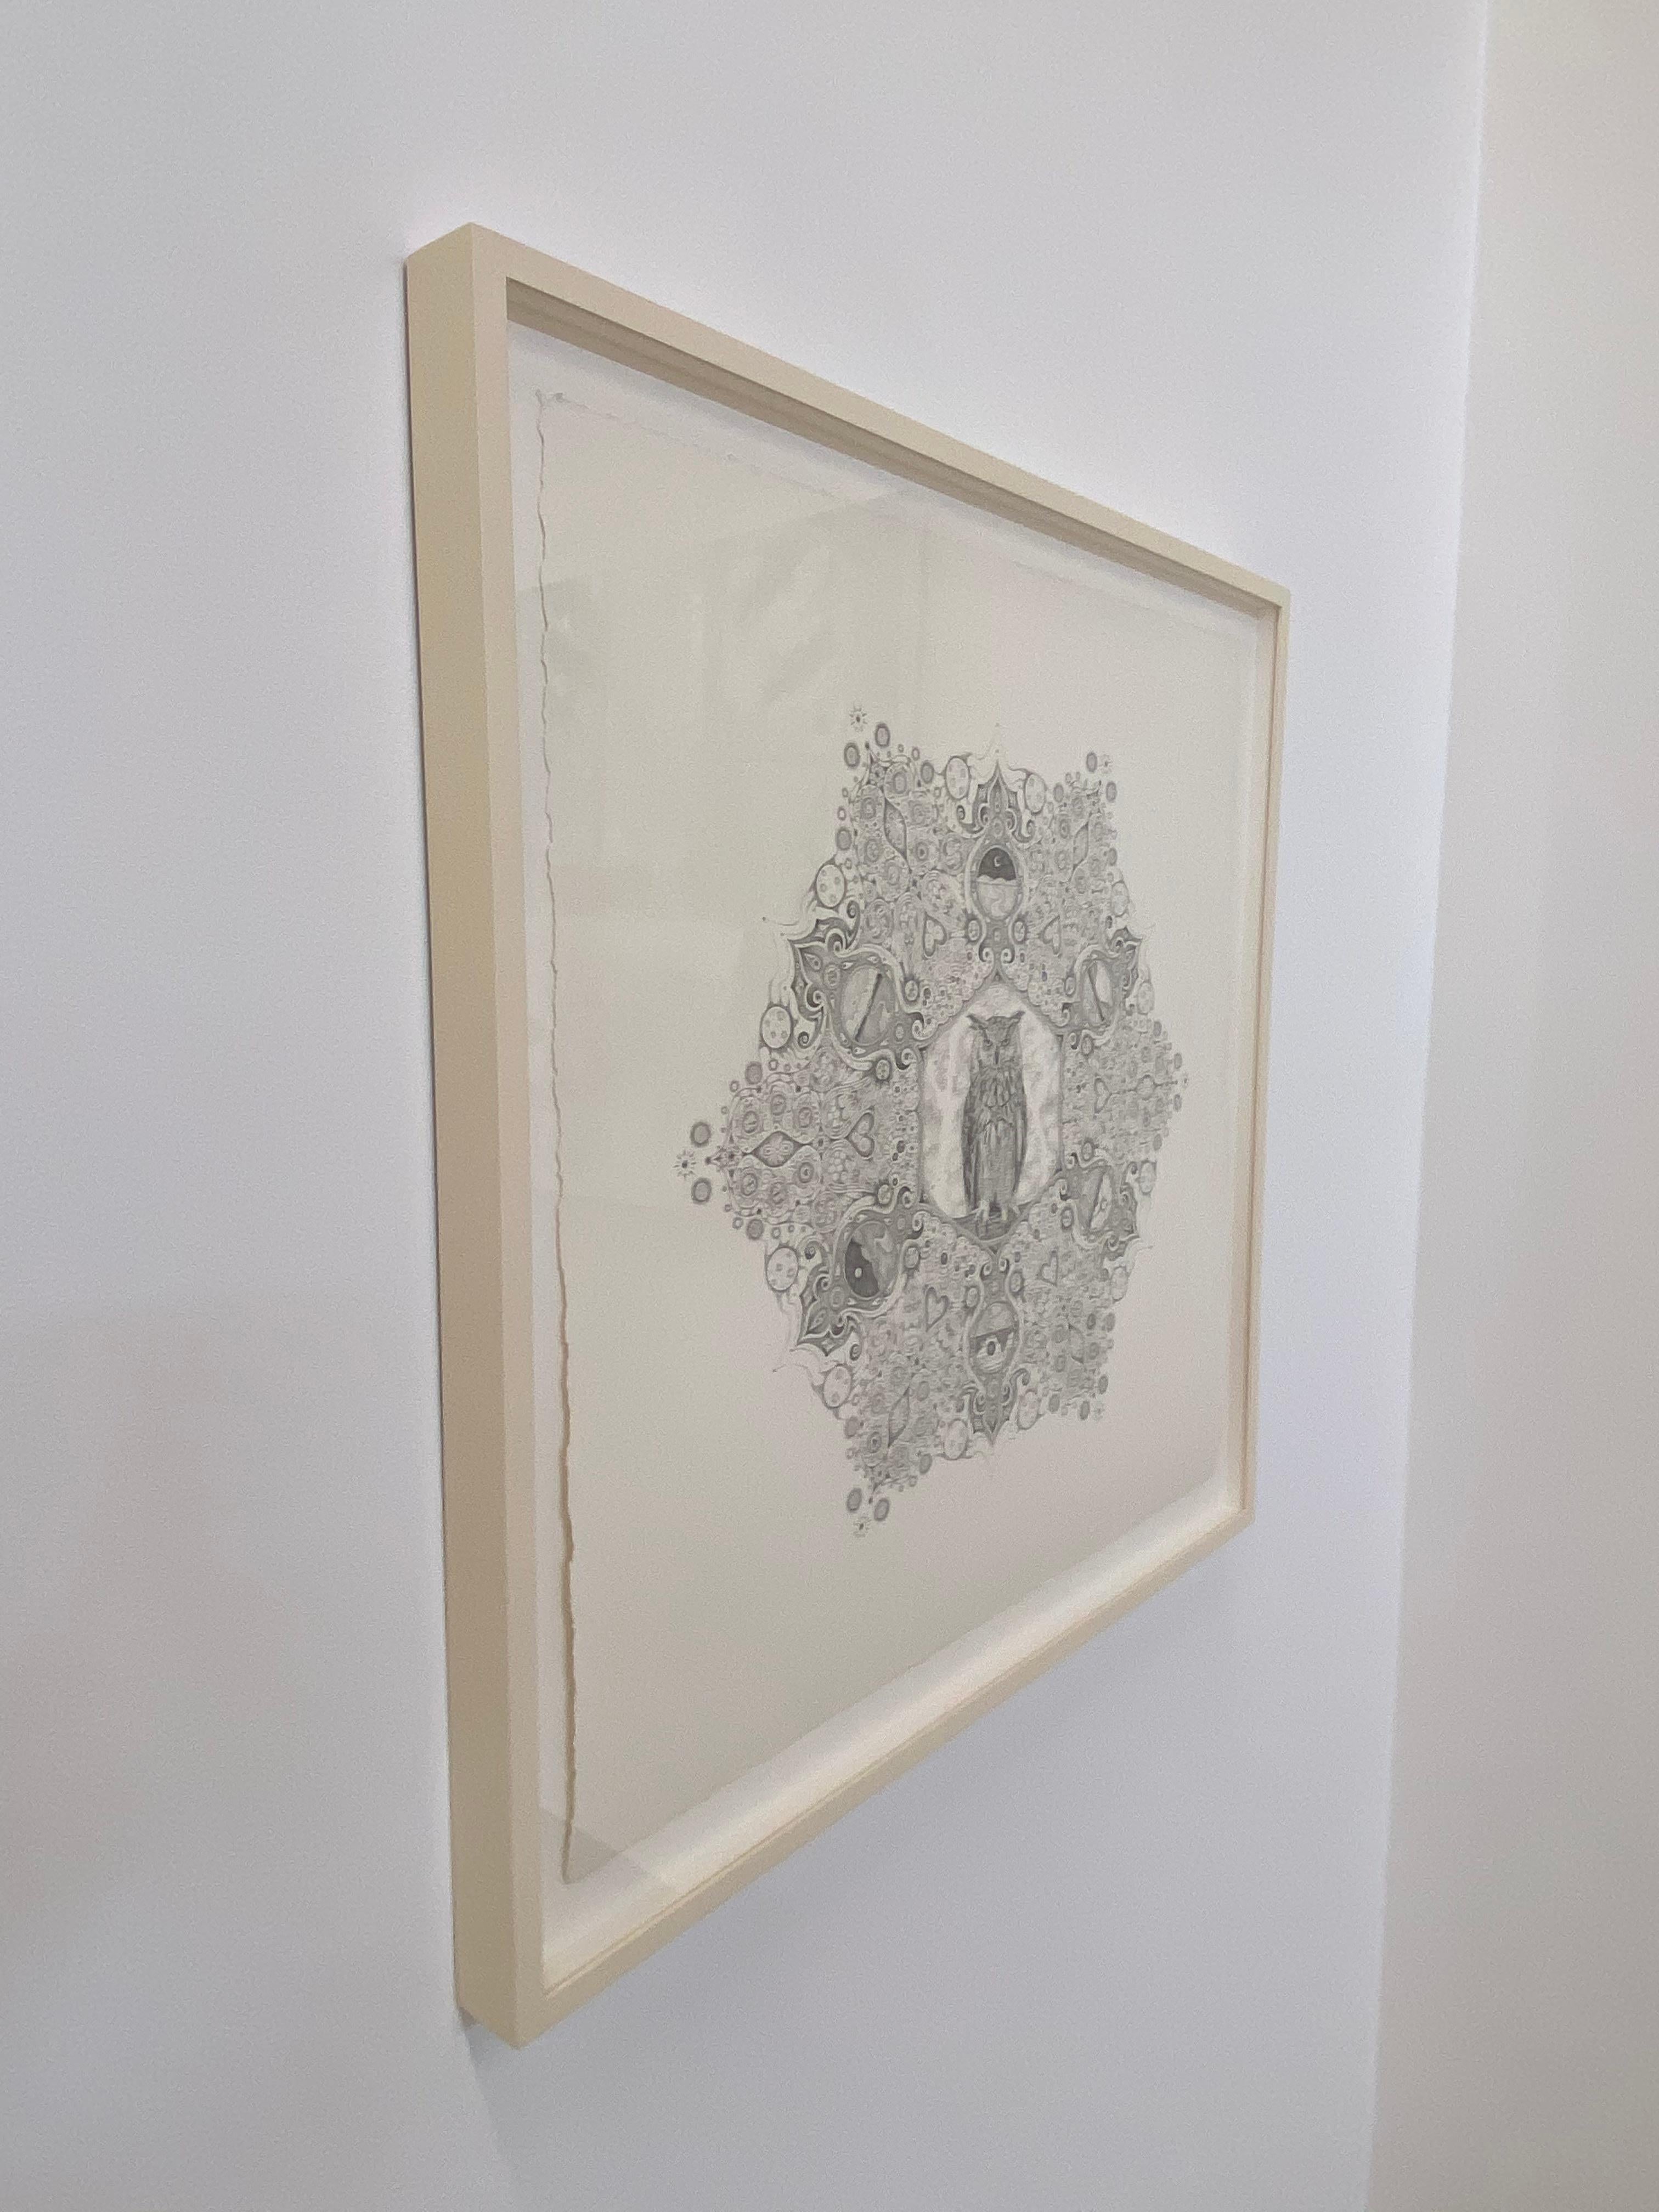 Snowflakes 84 Forester, Mandala Pencil Drawing, Owl, Cosmic Imagery, Landscapes - Gray Abstract Drawing by Michiyo Ihara